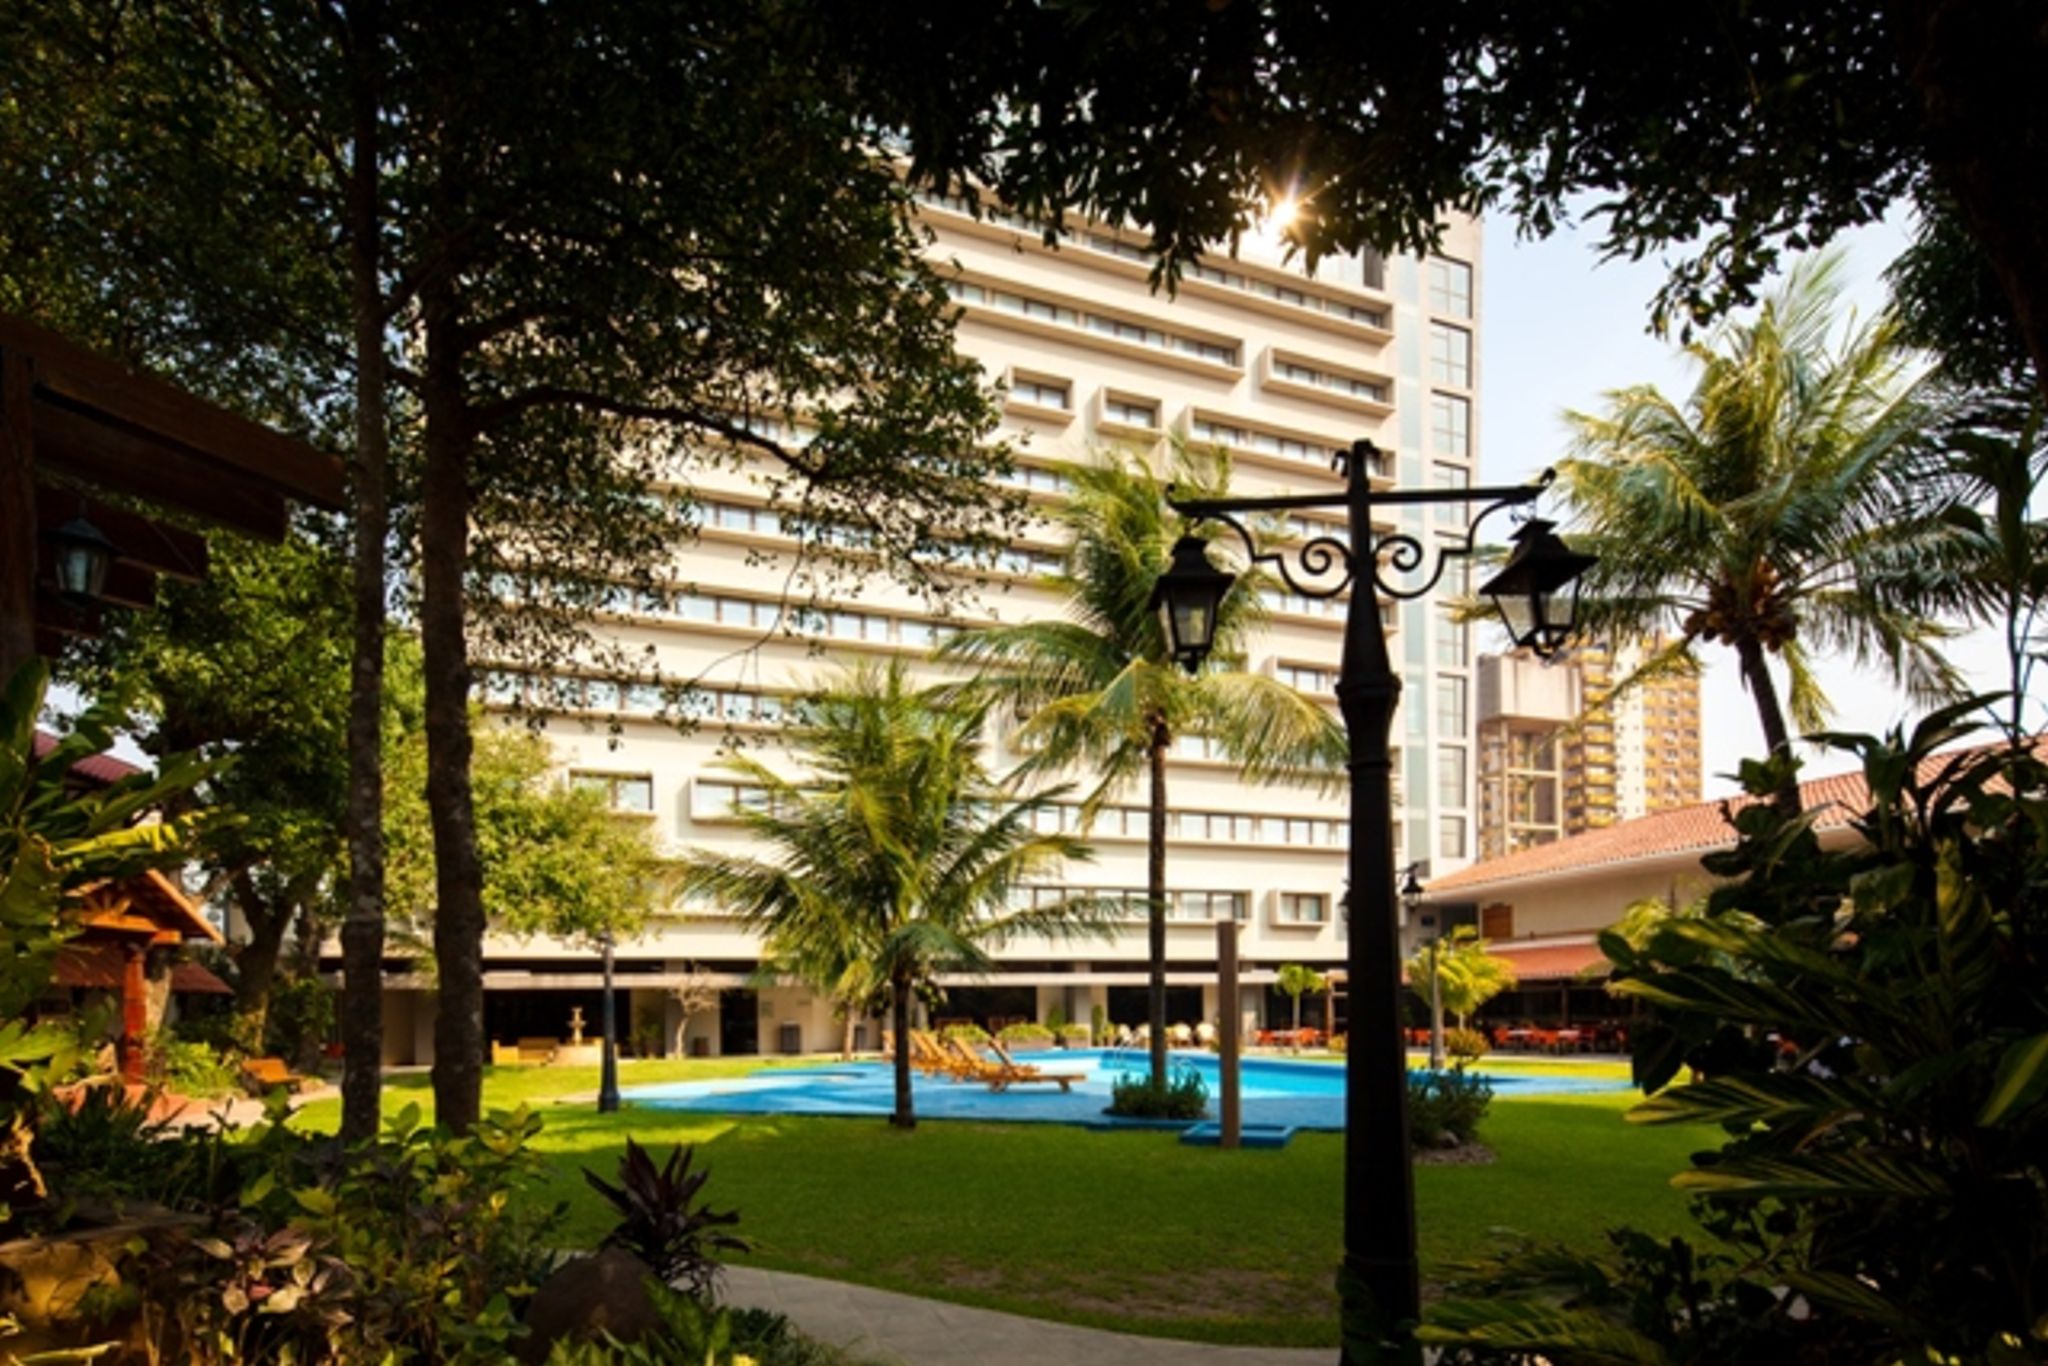 Hotel Cortez image